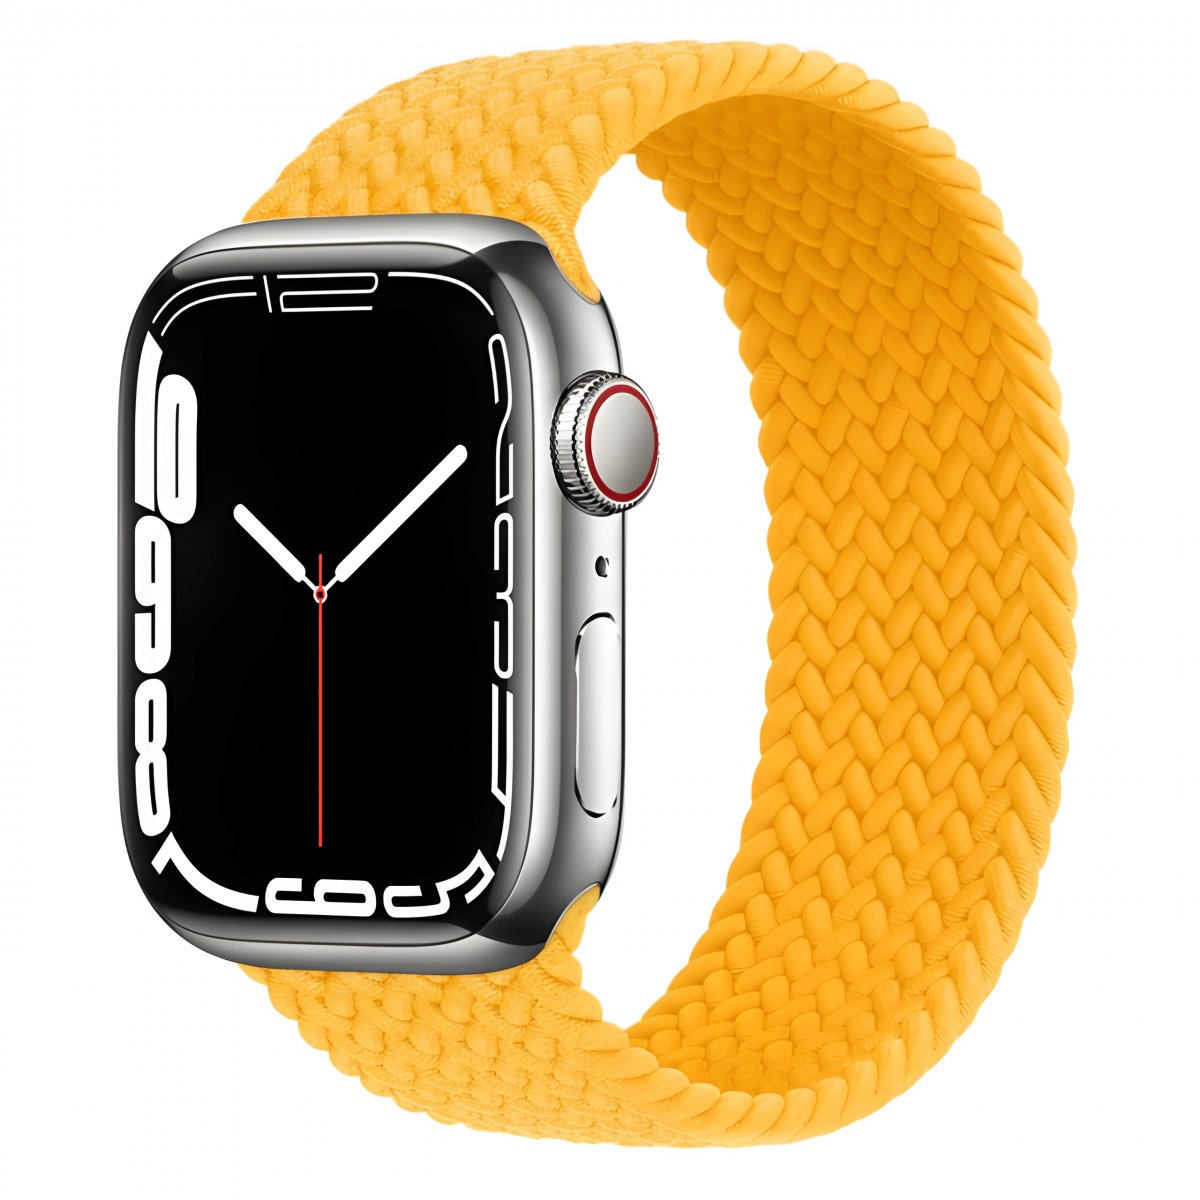 Řemínek iMore Braided Solo Loop Apple Watch Series 1/2/3 38mm - oranžovožlutý (L)